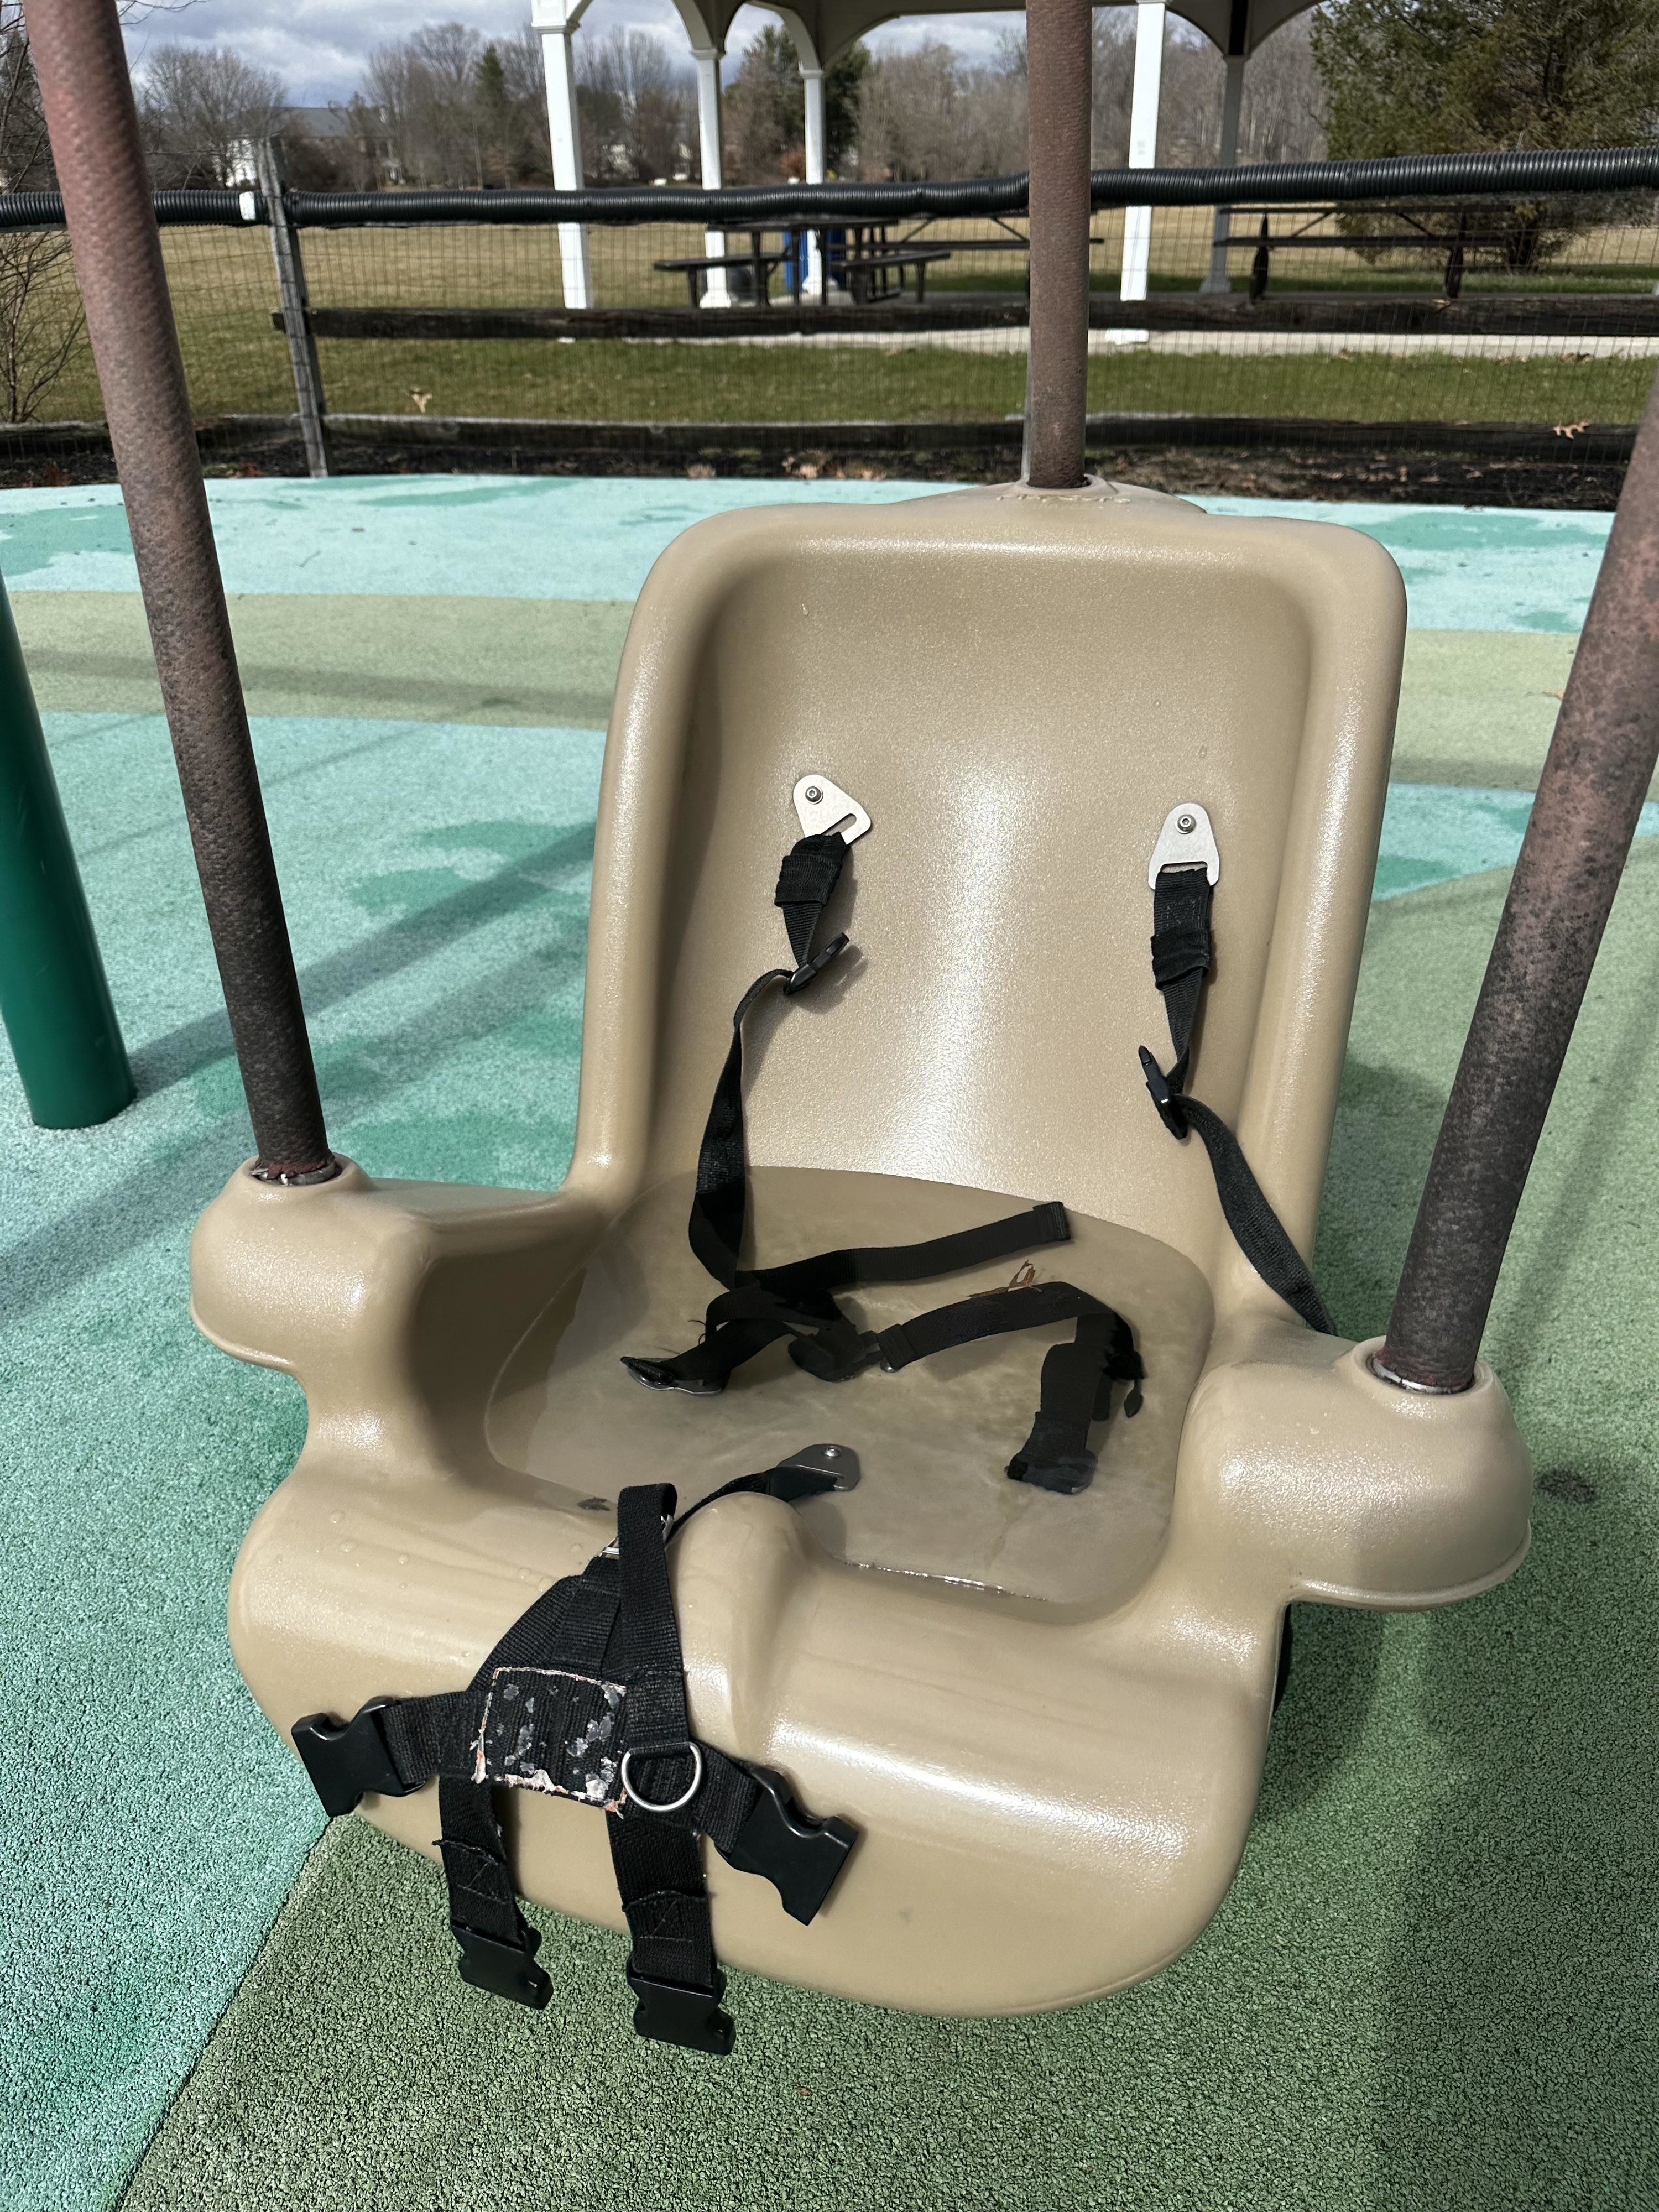 A wet child swing